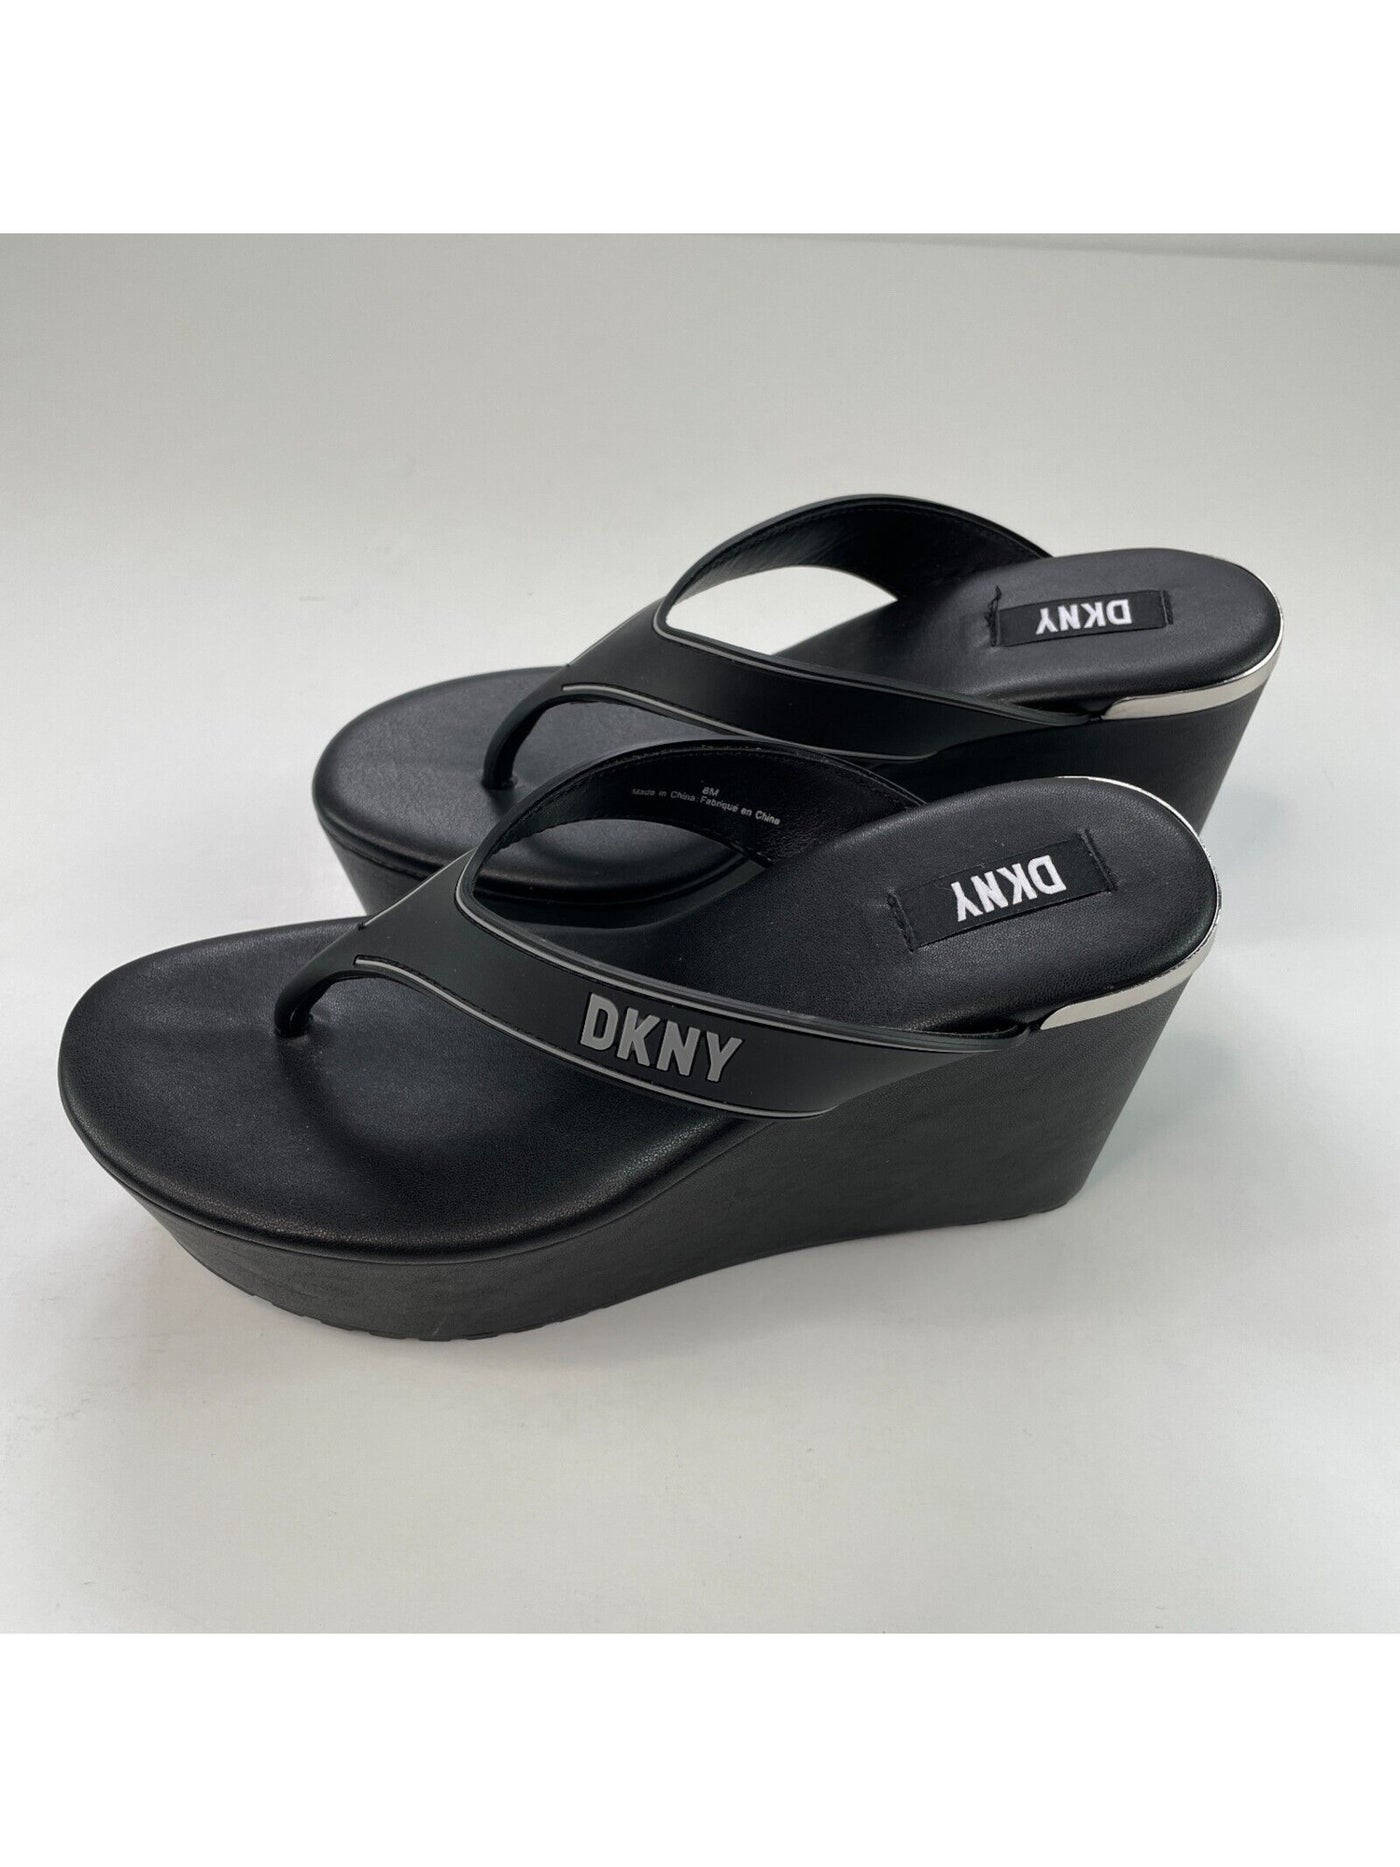 DKNY Womens Black 2" Platform Comfort Logo Trina Round Toe Wedge Slip On Thong Sandals 10 M